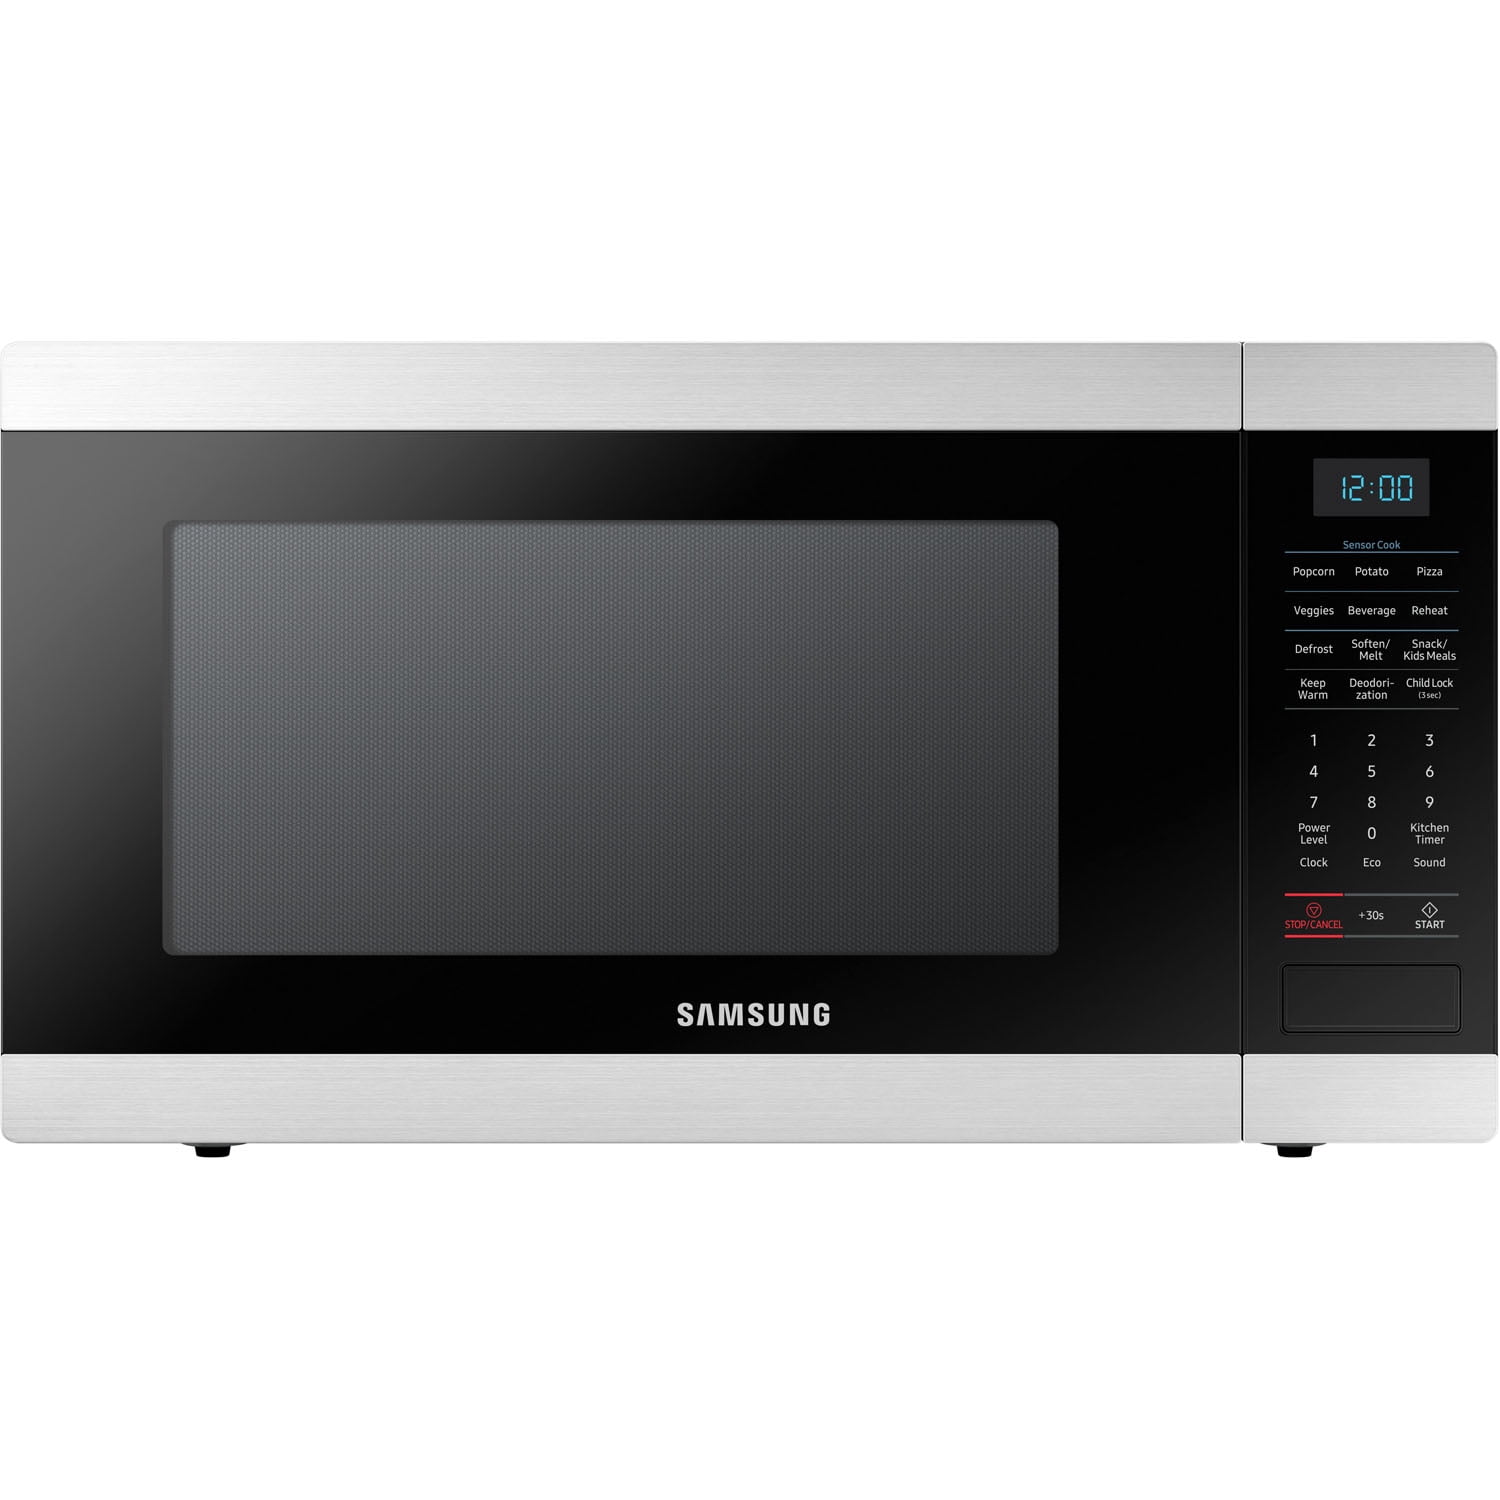 Samsung 1.9 cu. ft. Large Capacity Countertop Microwave - Stainless Steel - Walmart.com